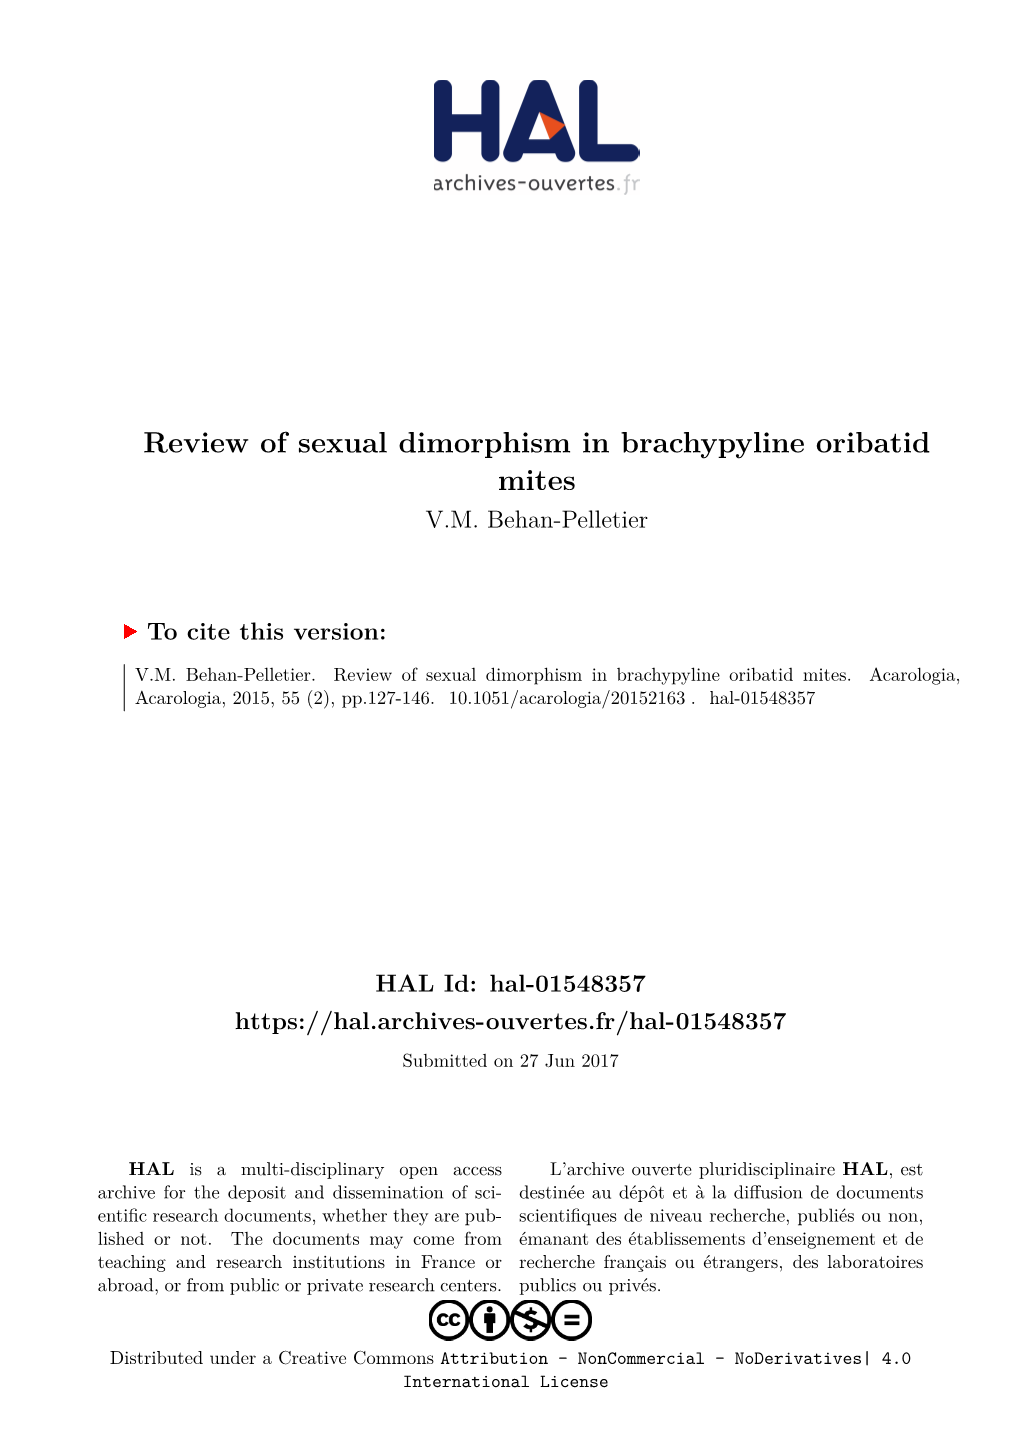 Review of Sexual Dimorphism in Brachypyline Oribatid Mites V.M